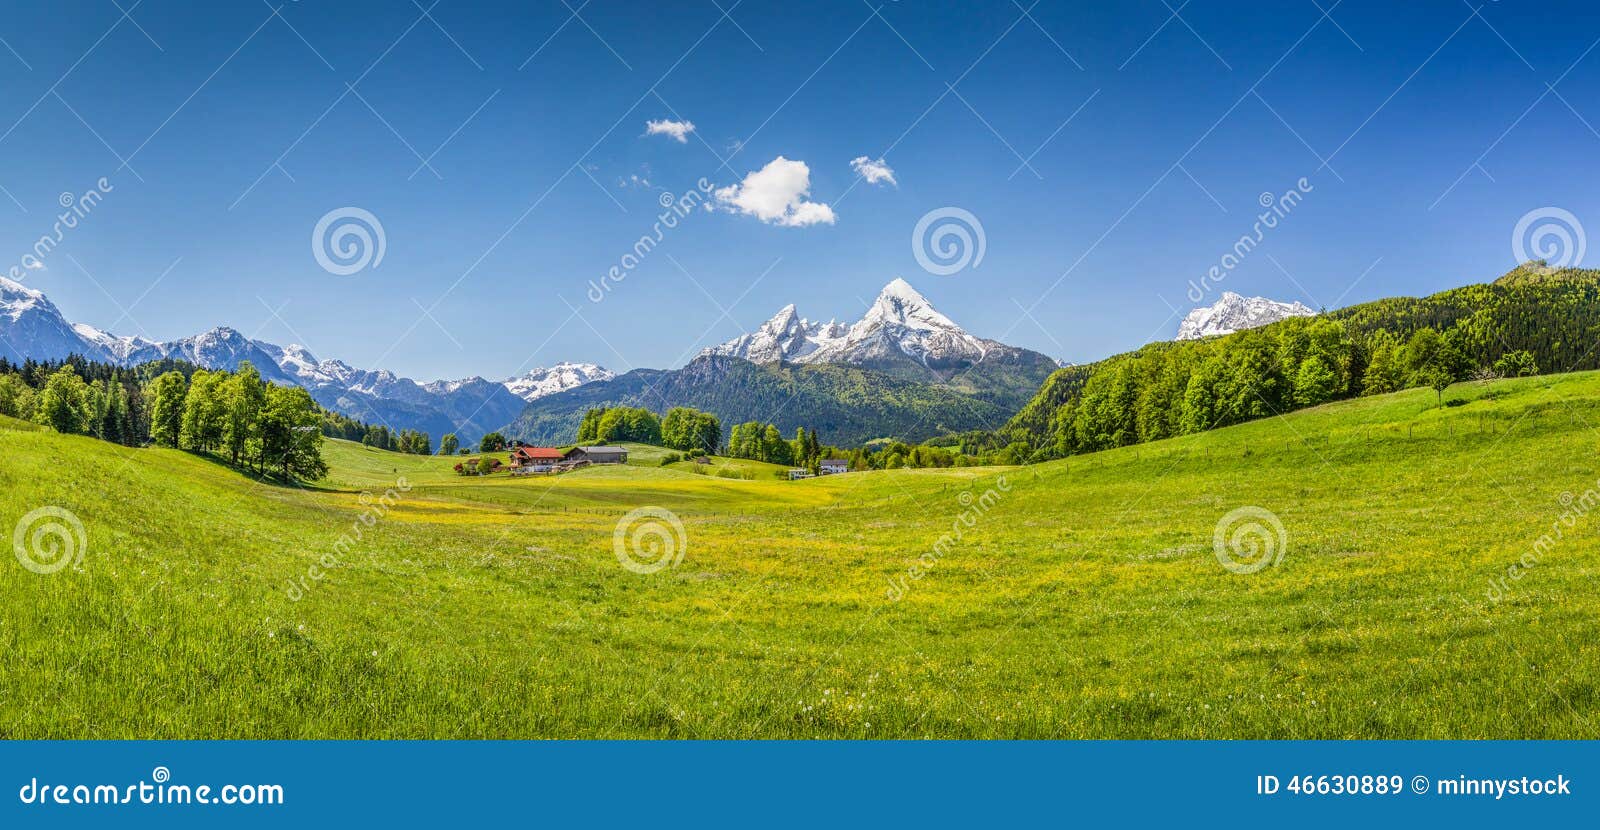 idyllic summer landscape in the alps